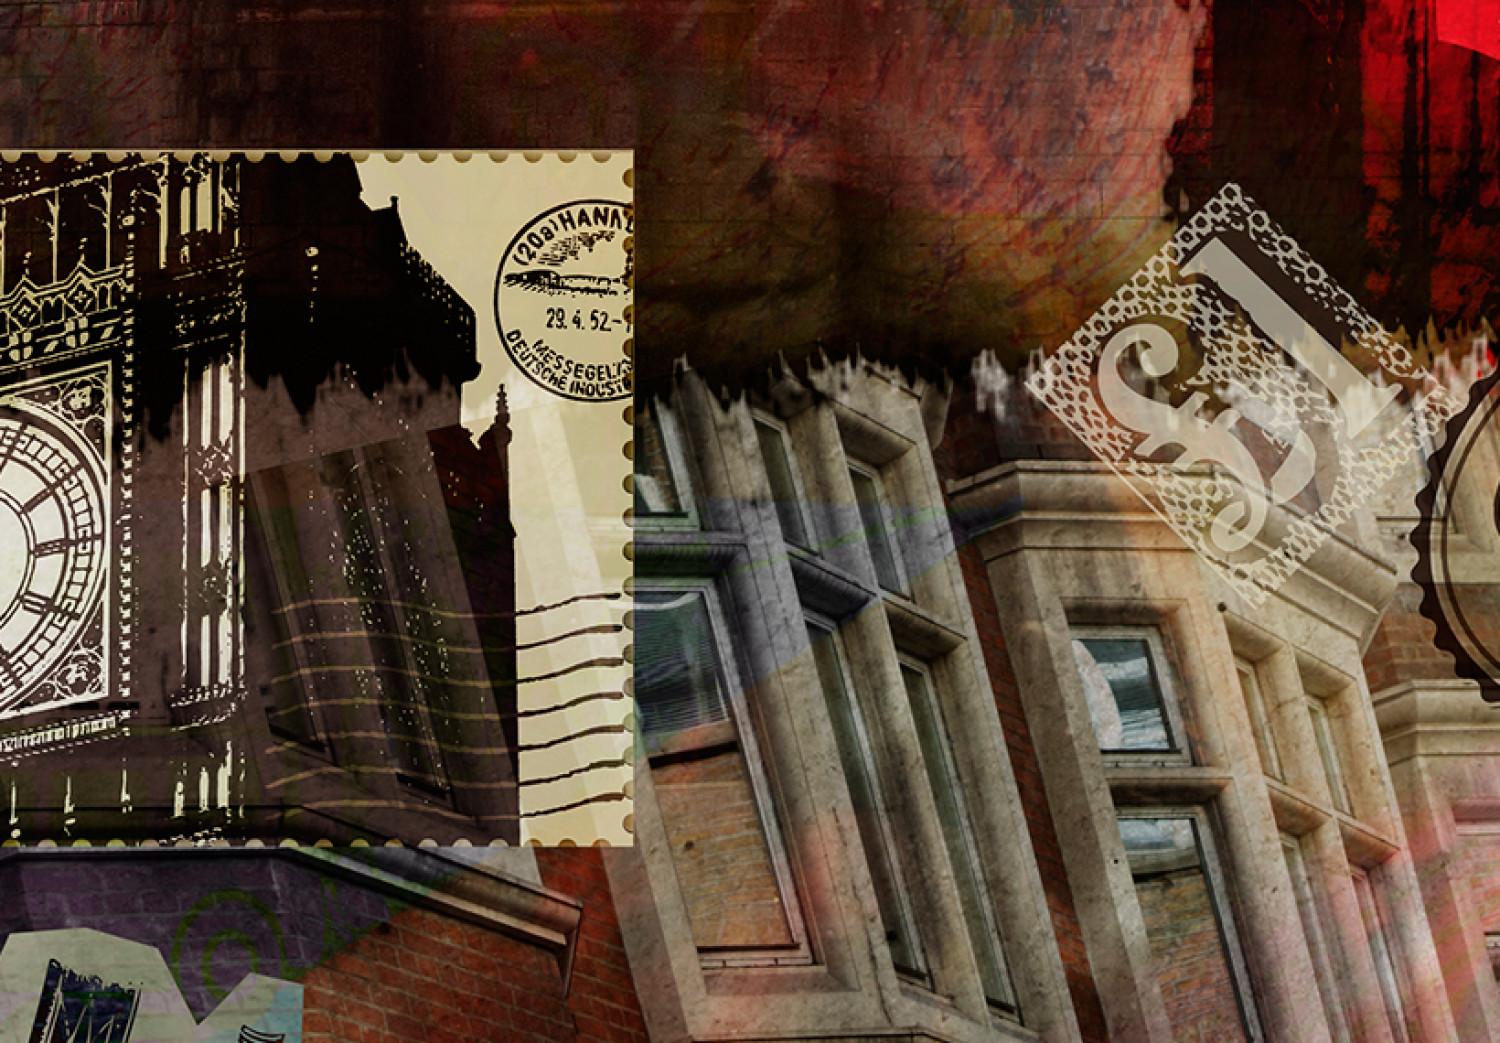 Cuadro decorativo Londres collage - tríptico